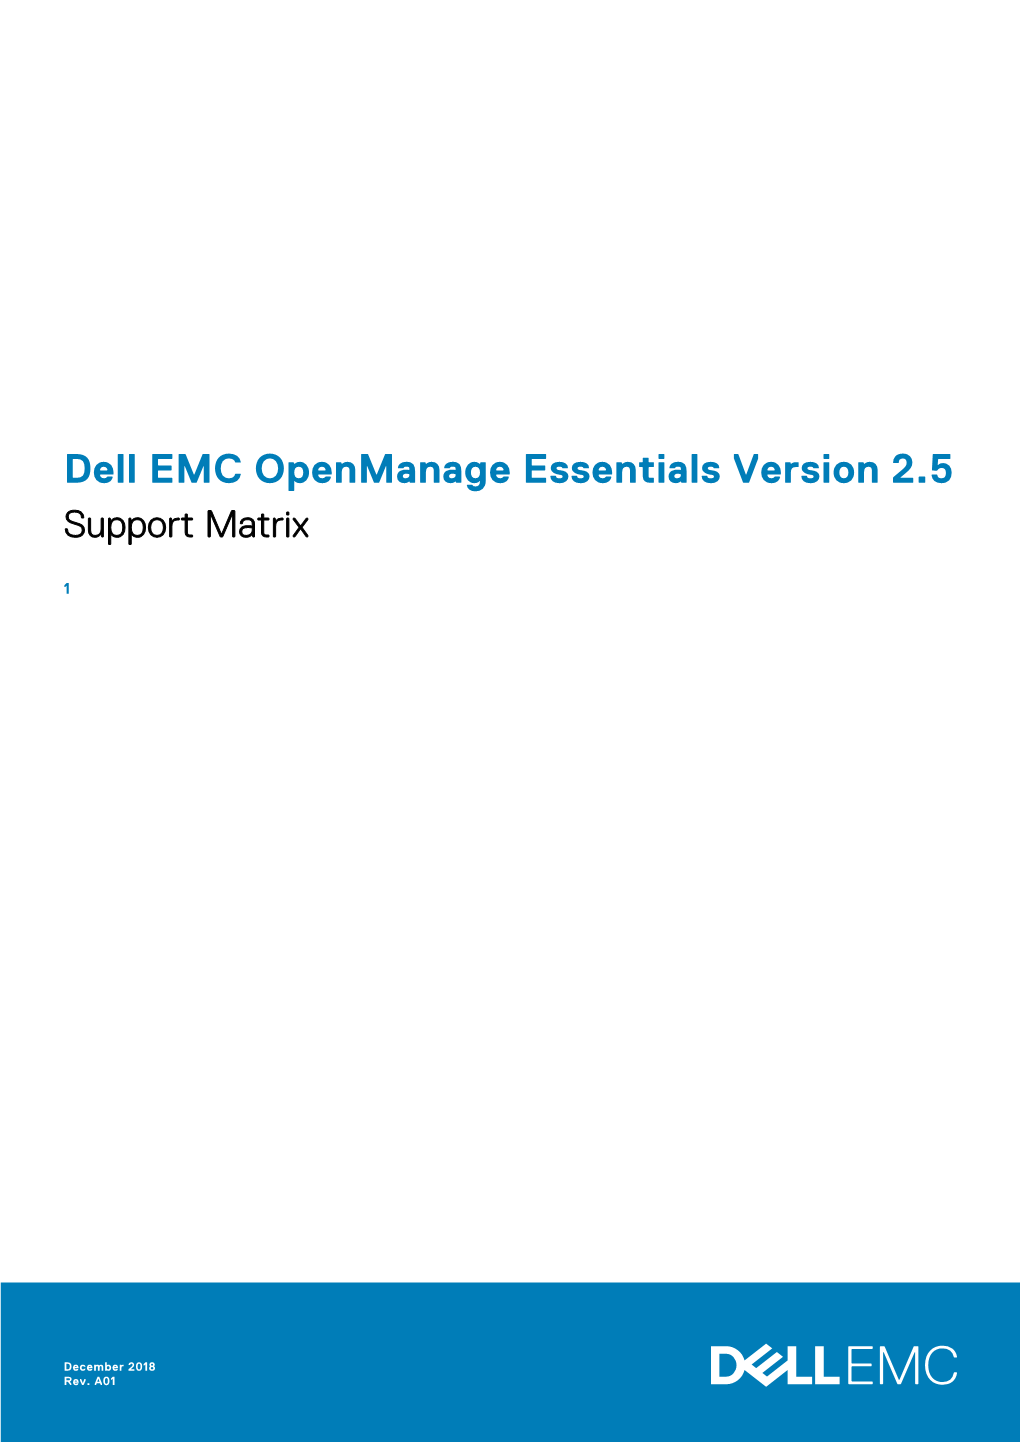 Dell EMC Openmanage Essentials Version 2.5 Support Matrix